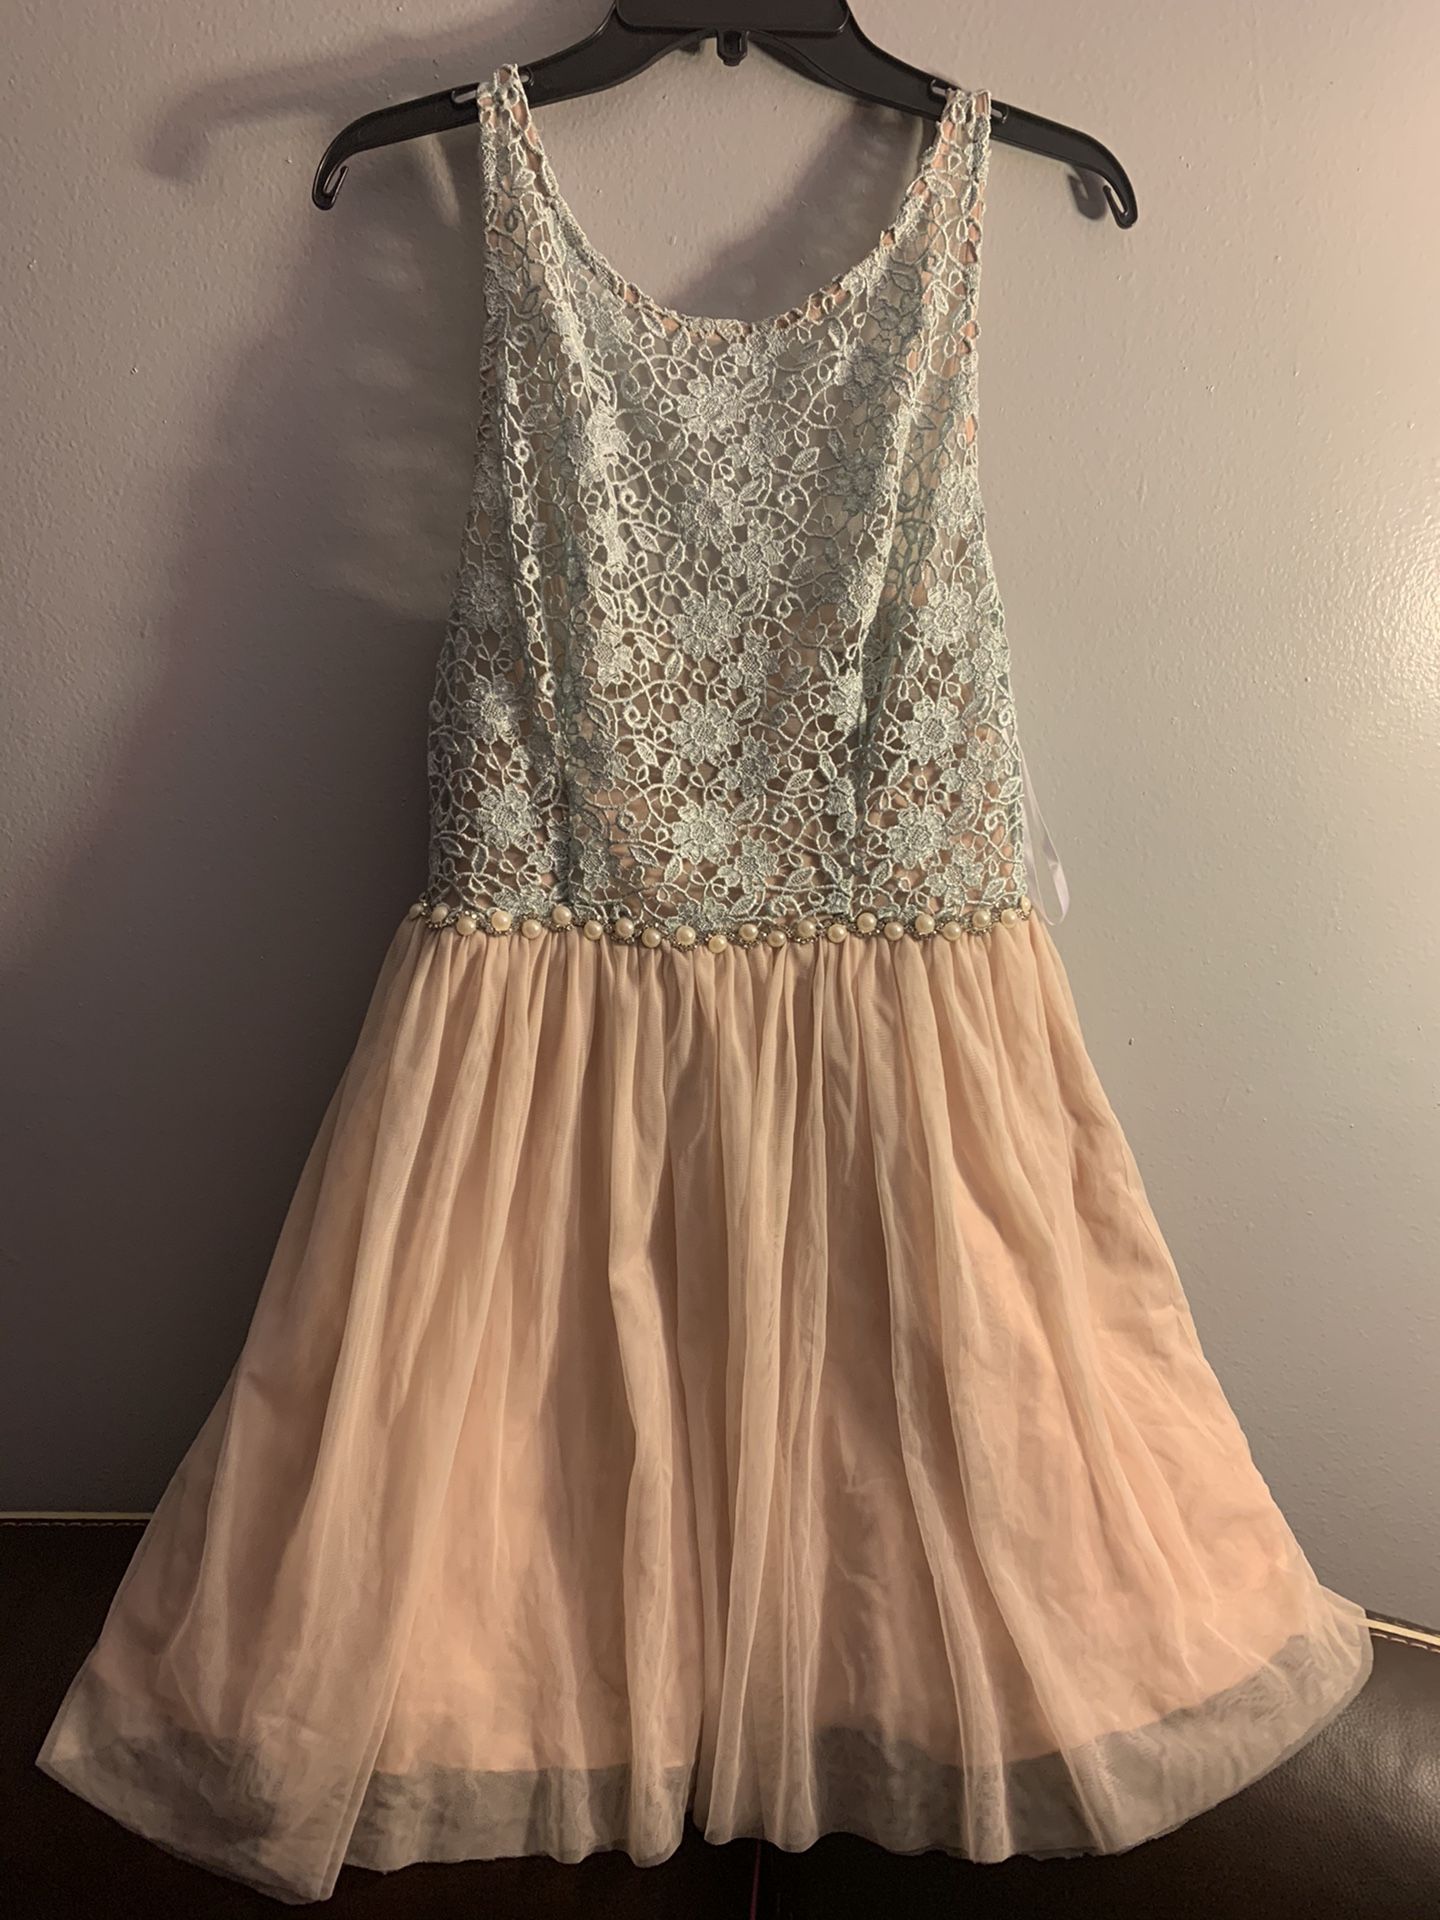 Size 11 dress